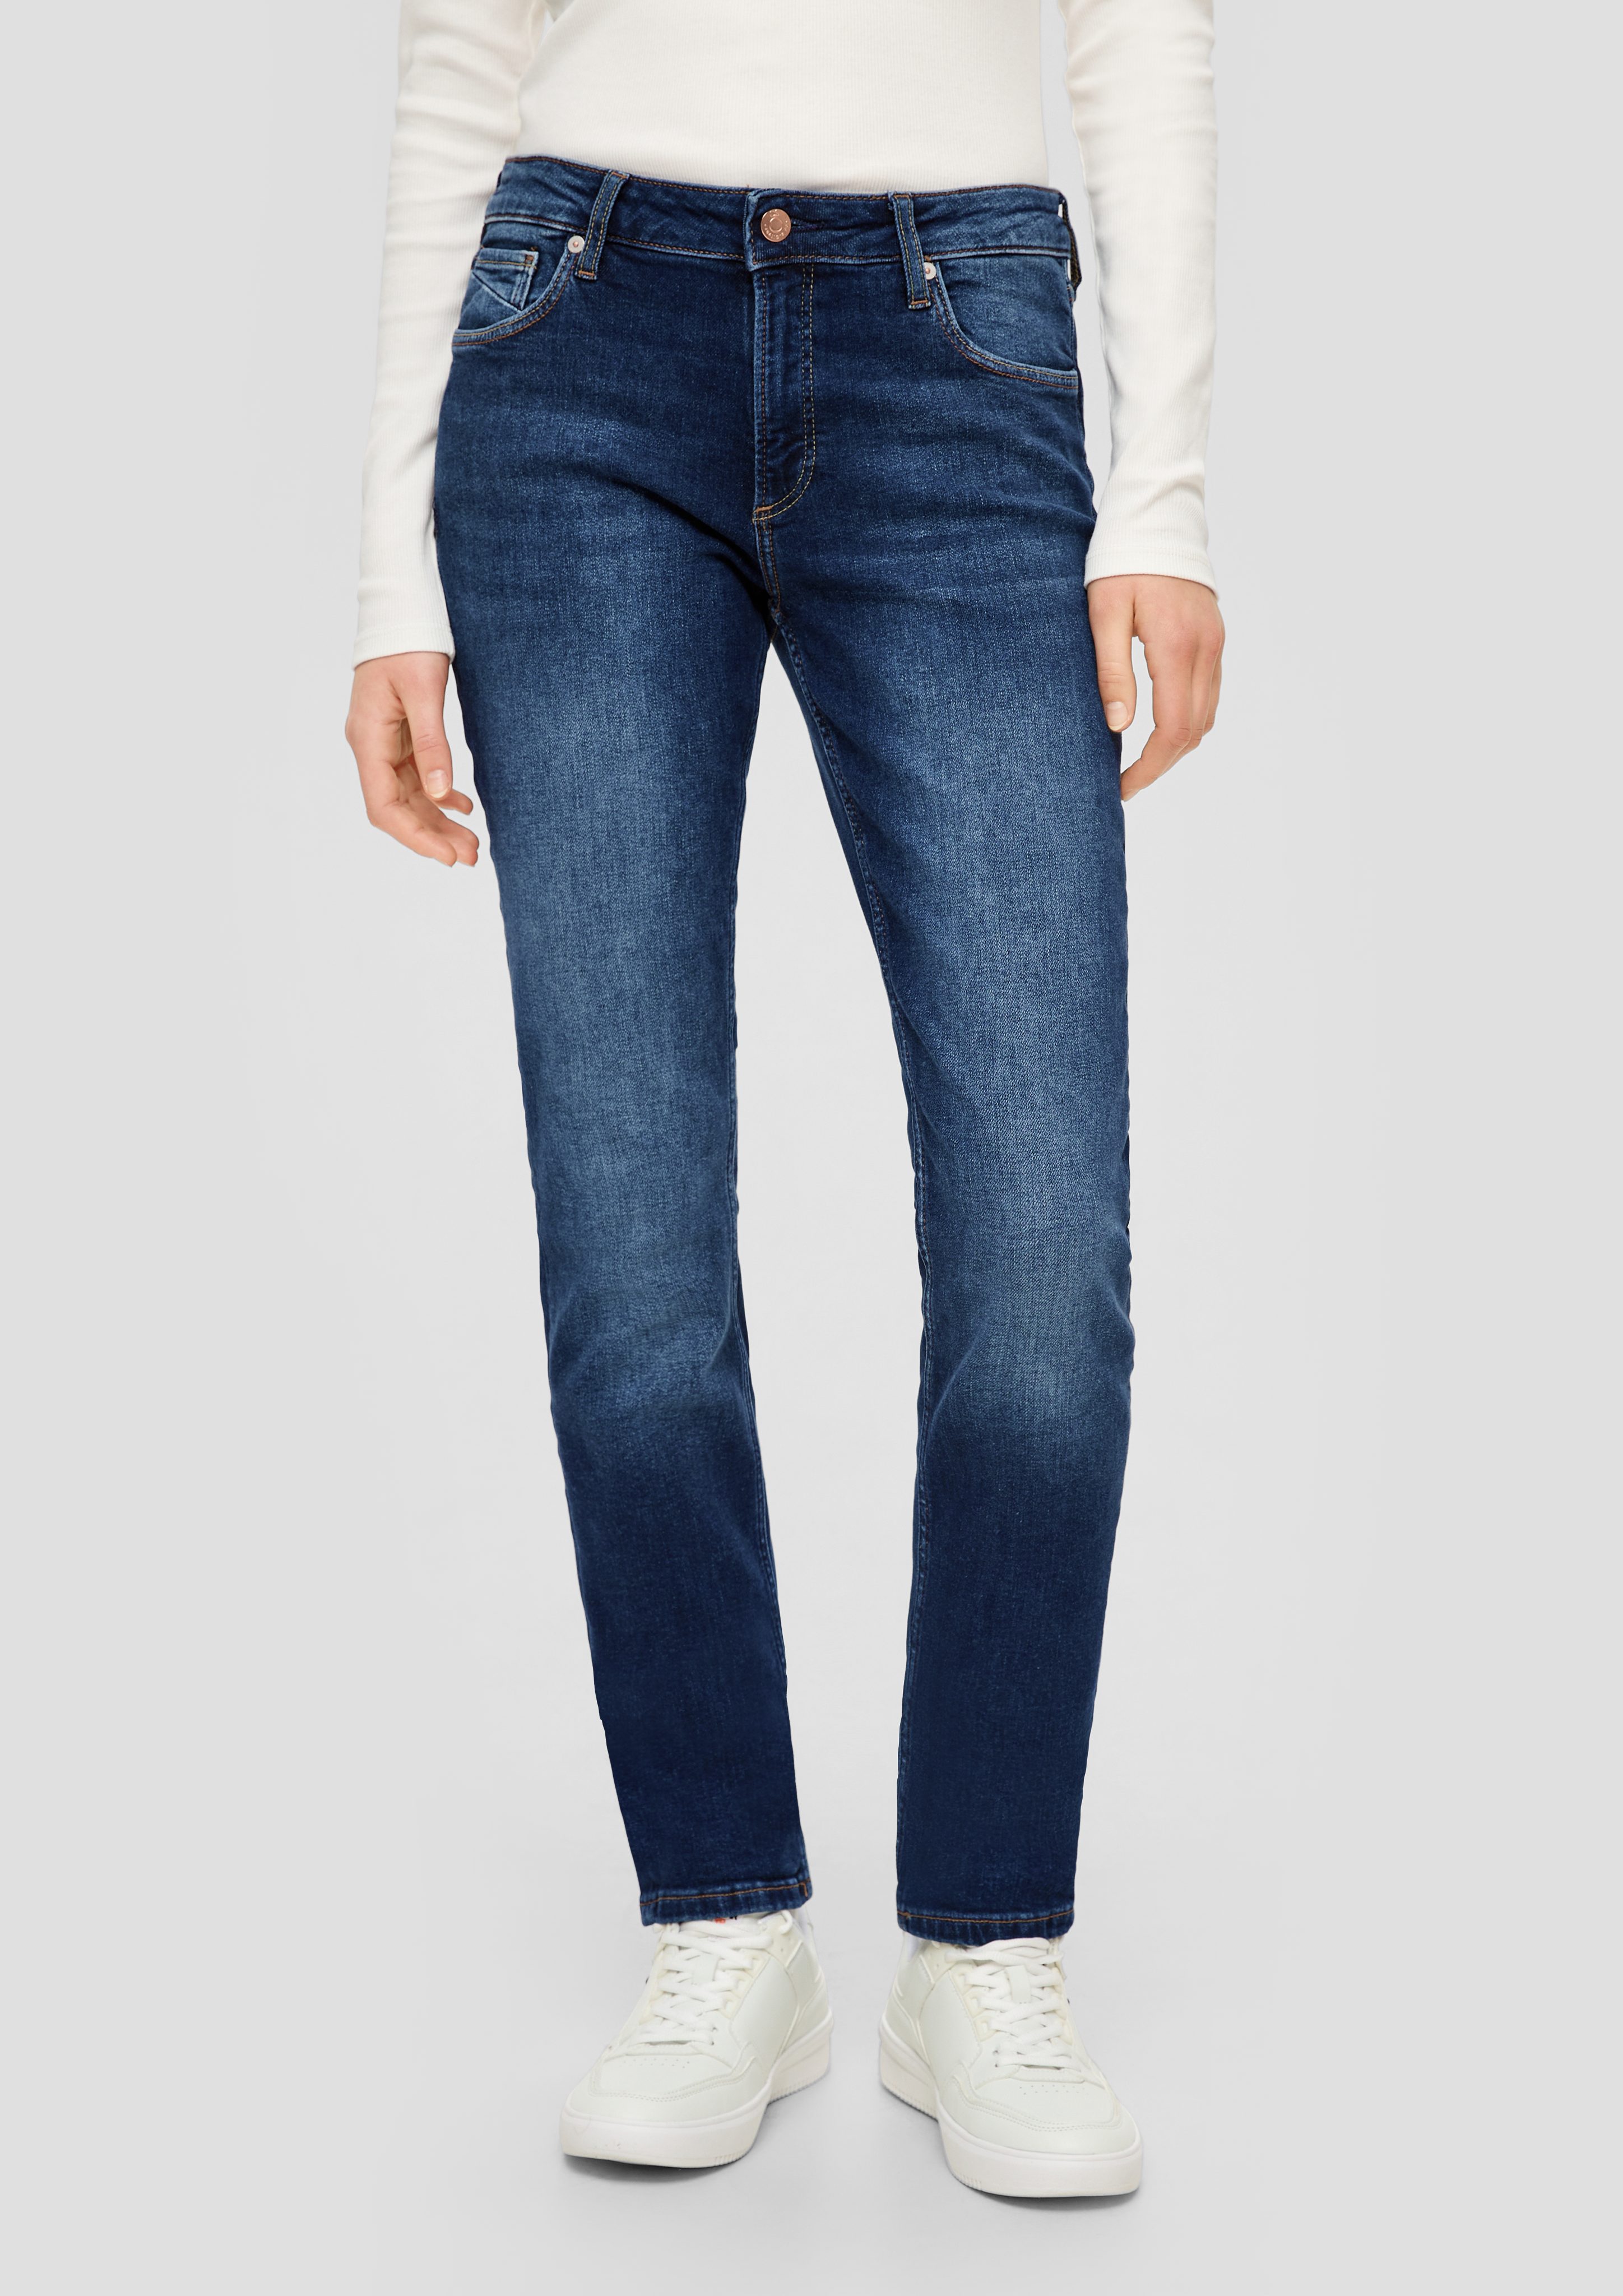 Fit Catie Jeans Mid Slim QS / Slim / Rise / Waschung, Label-Patch, Leg Stoffhose Kontrastnähte